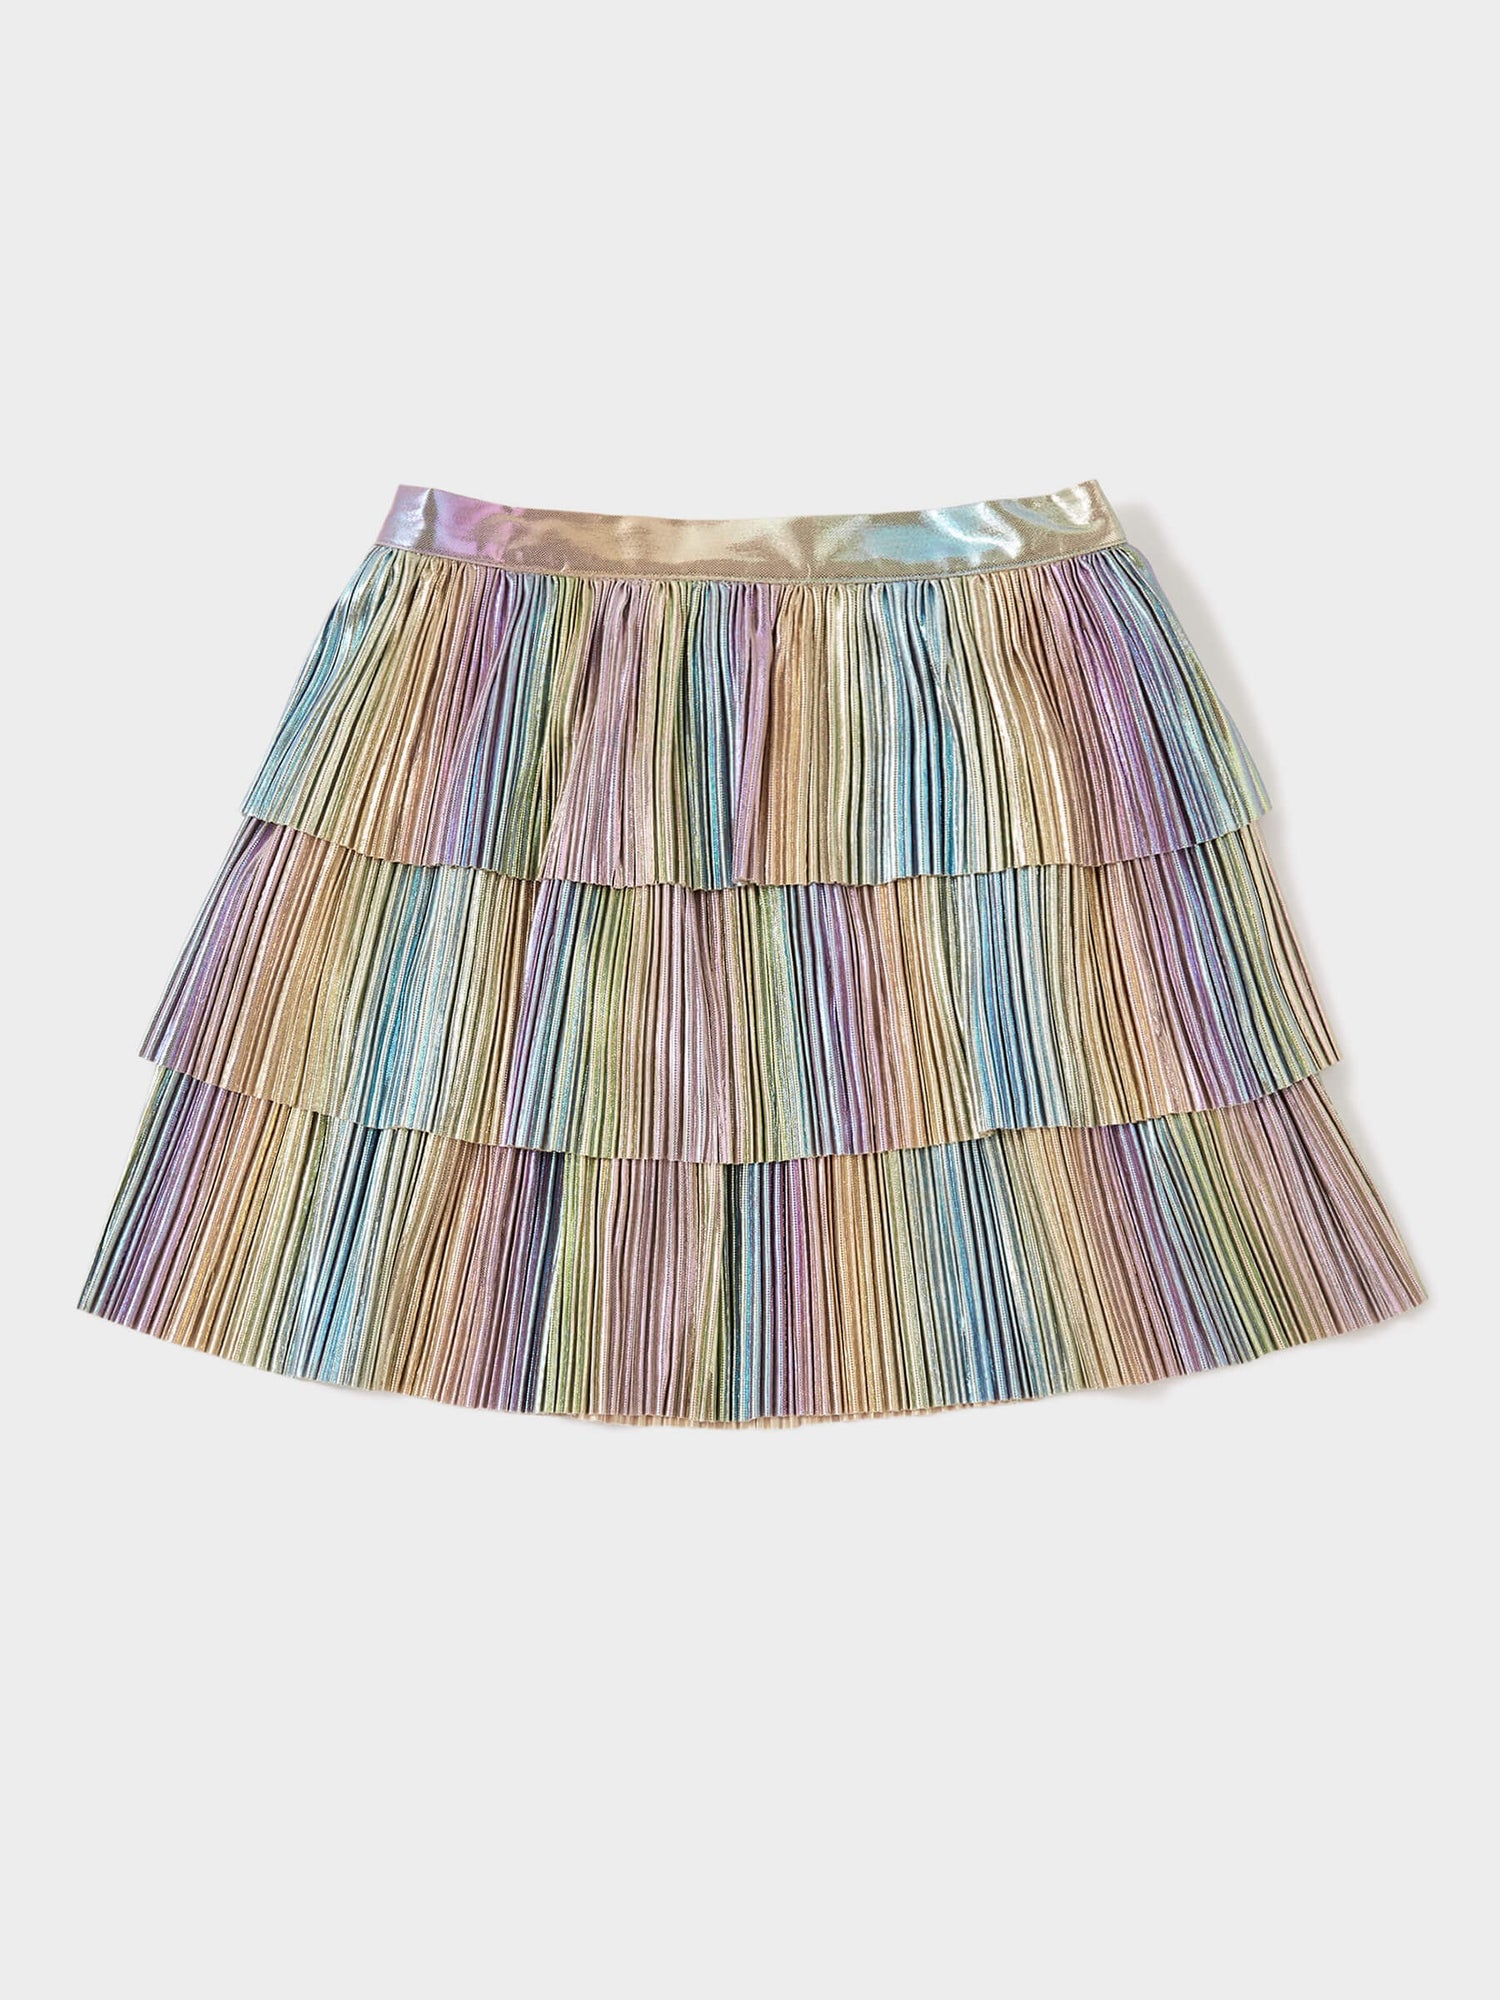 Andrea Metallic Skirt